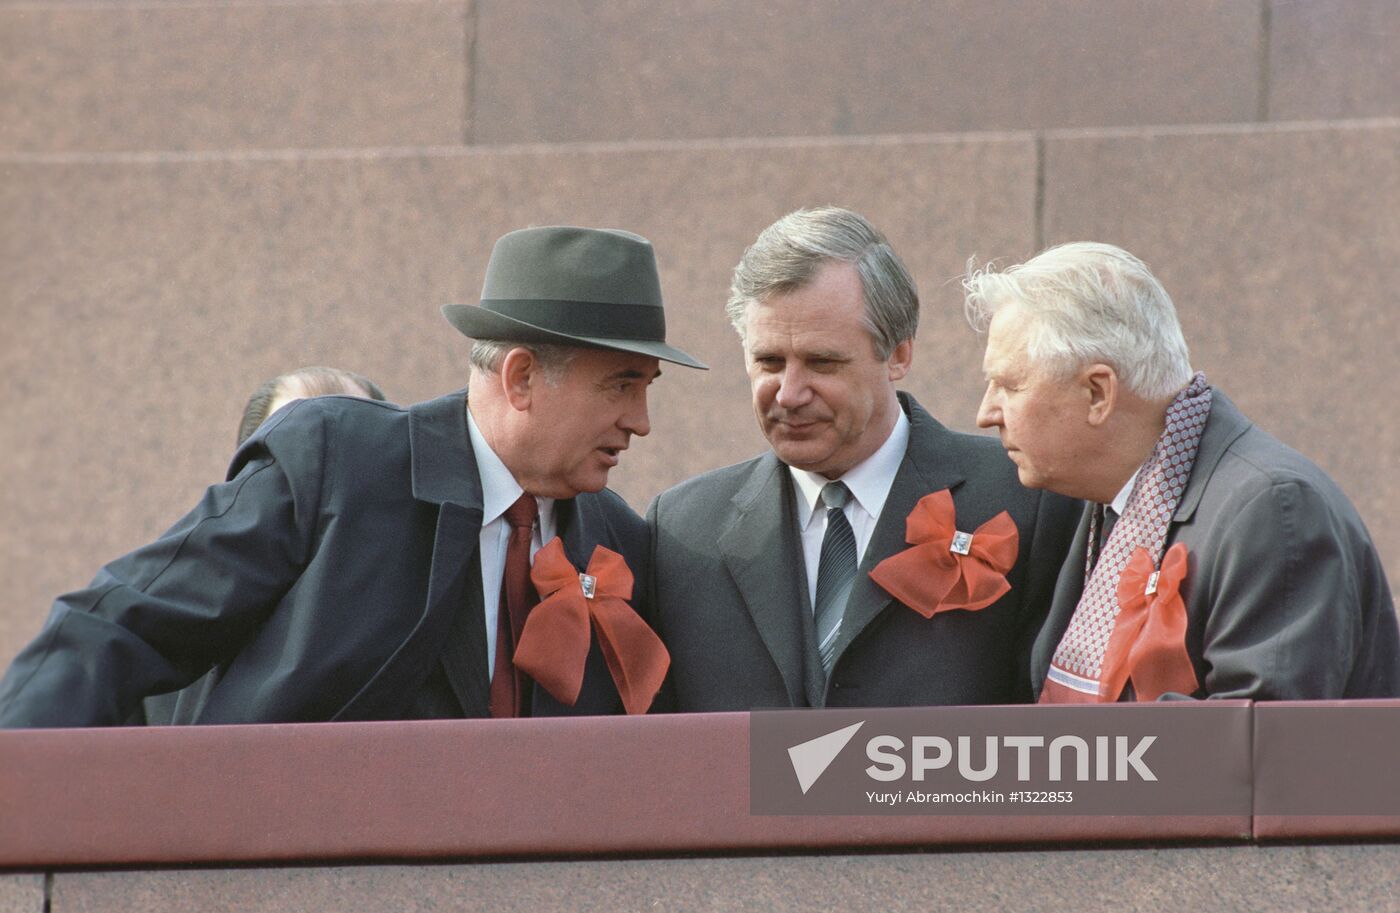 Mikhail Gorbachev, Nikolai Ryzhkov and Yegor Ligachev